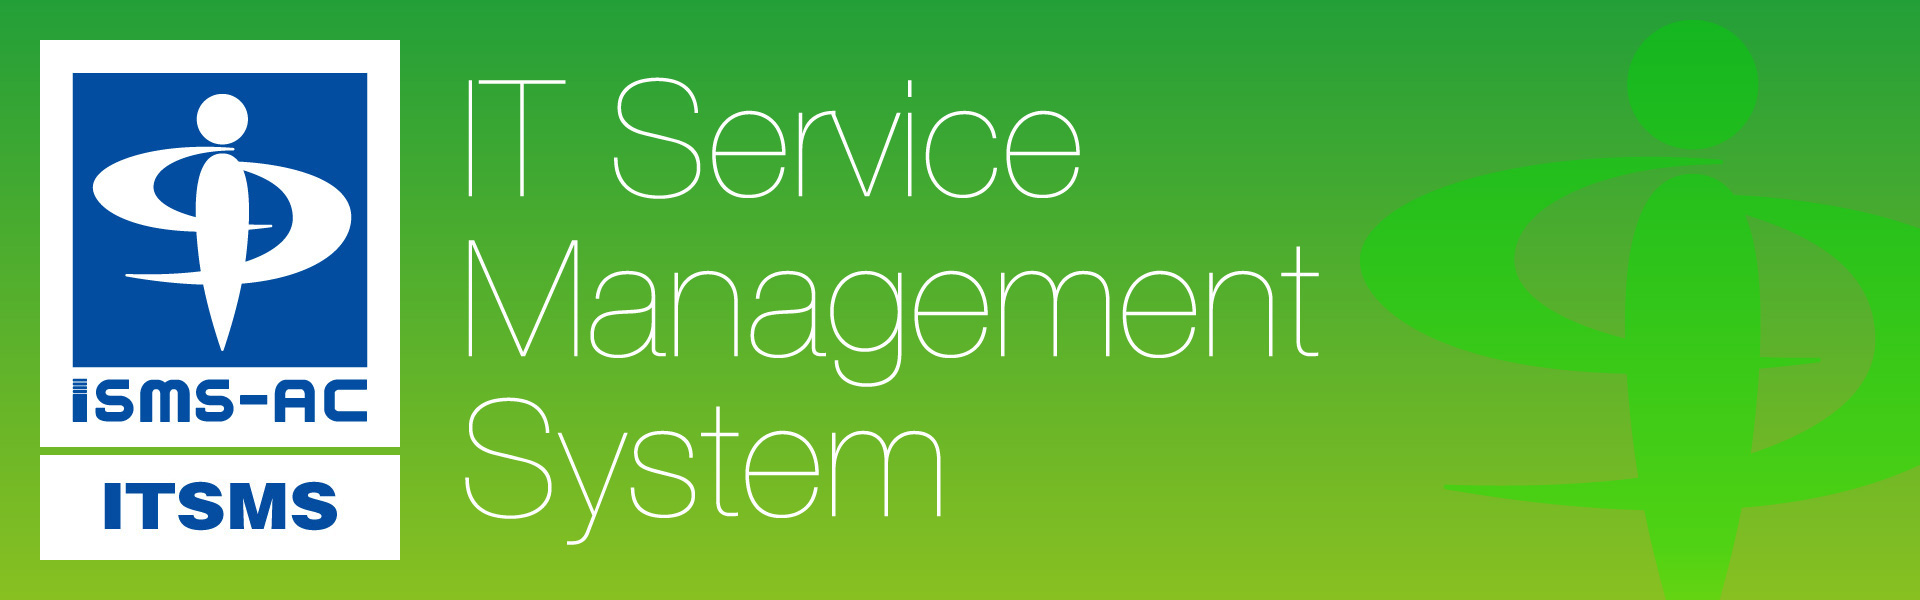 It Service Management System